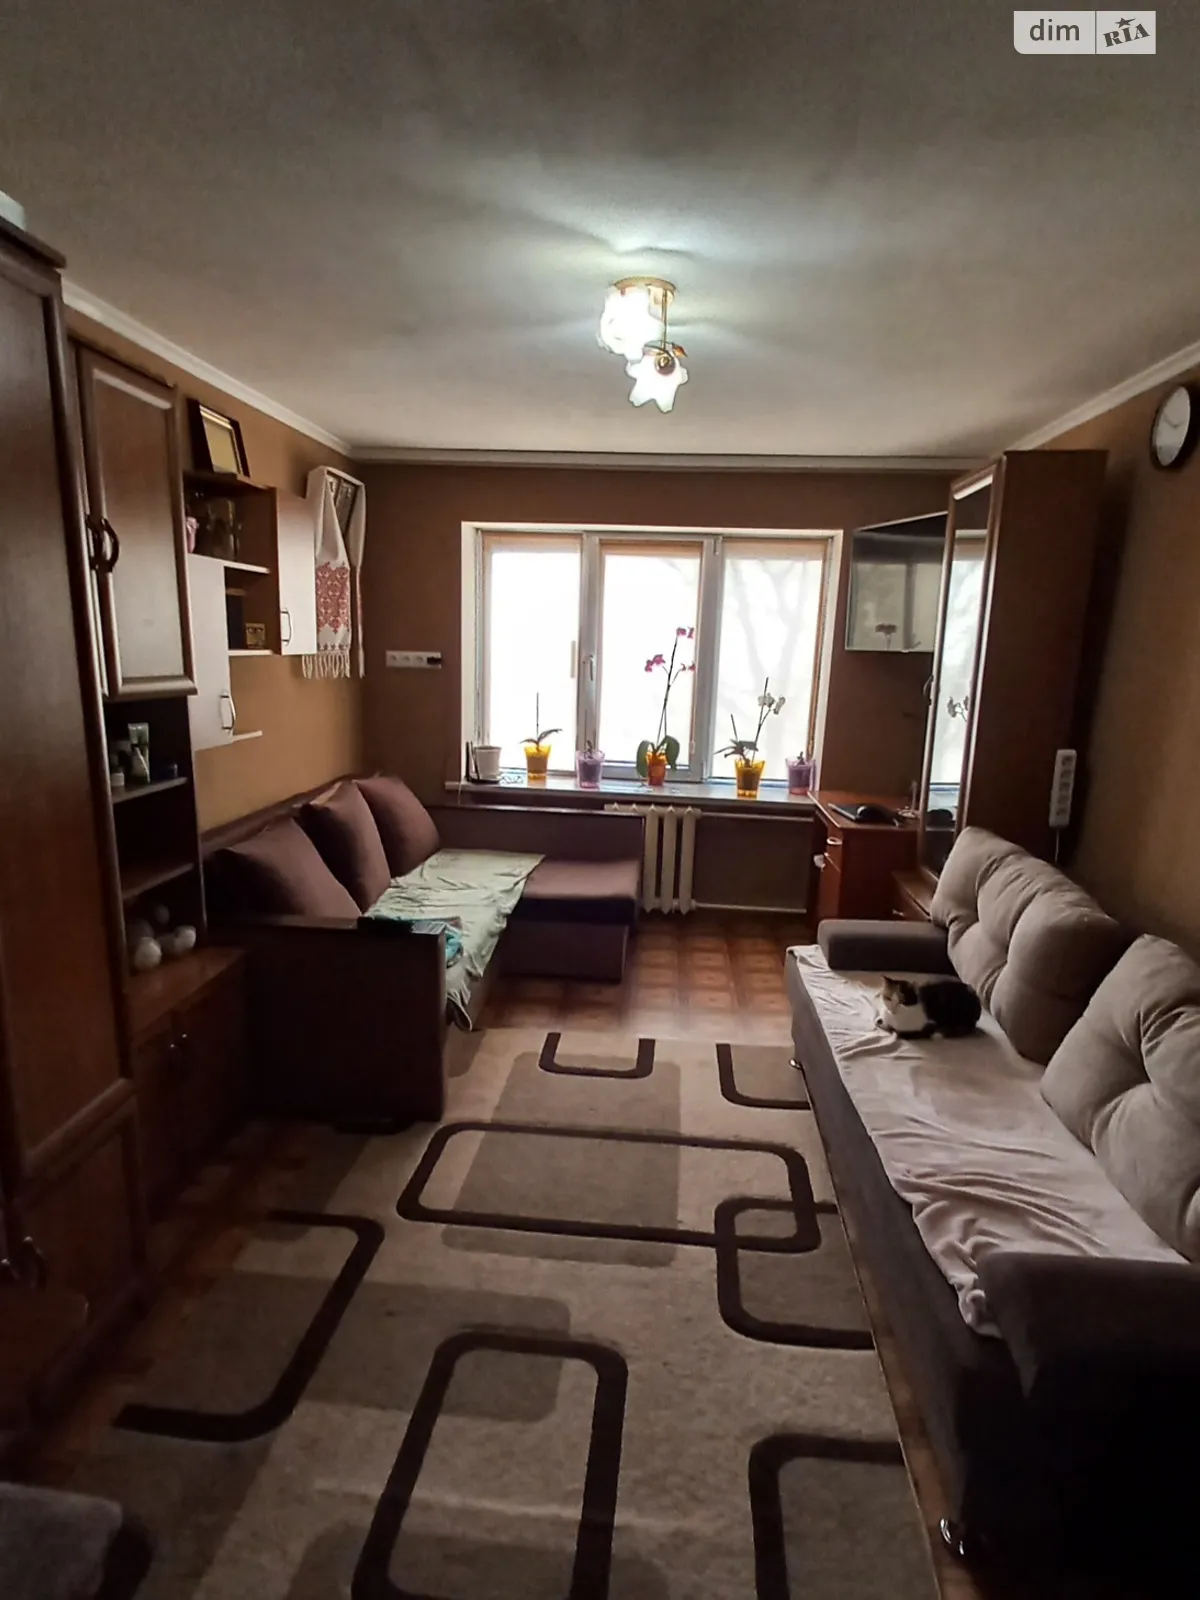 Продается комната 16 кв. м в Ровно - фото 3